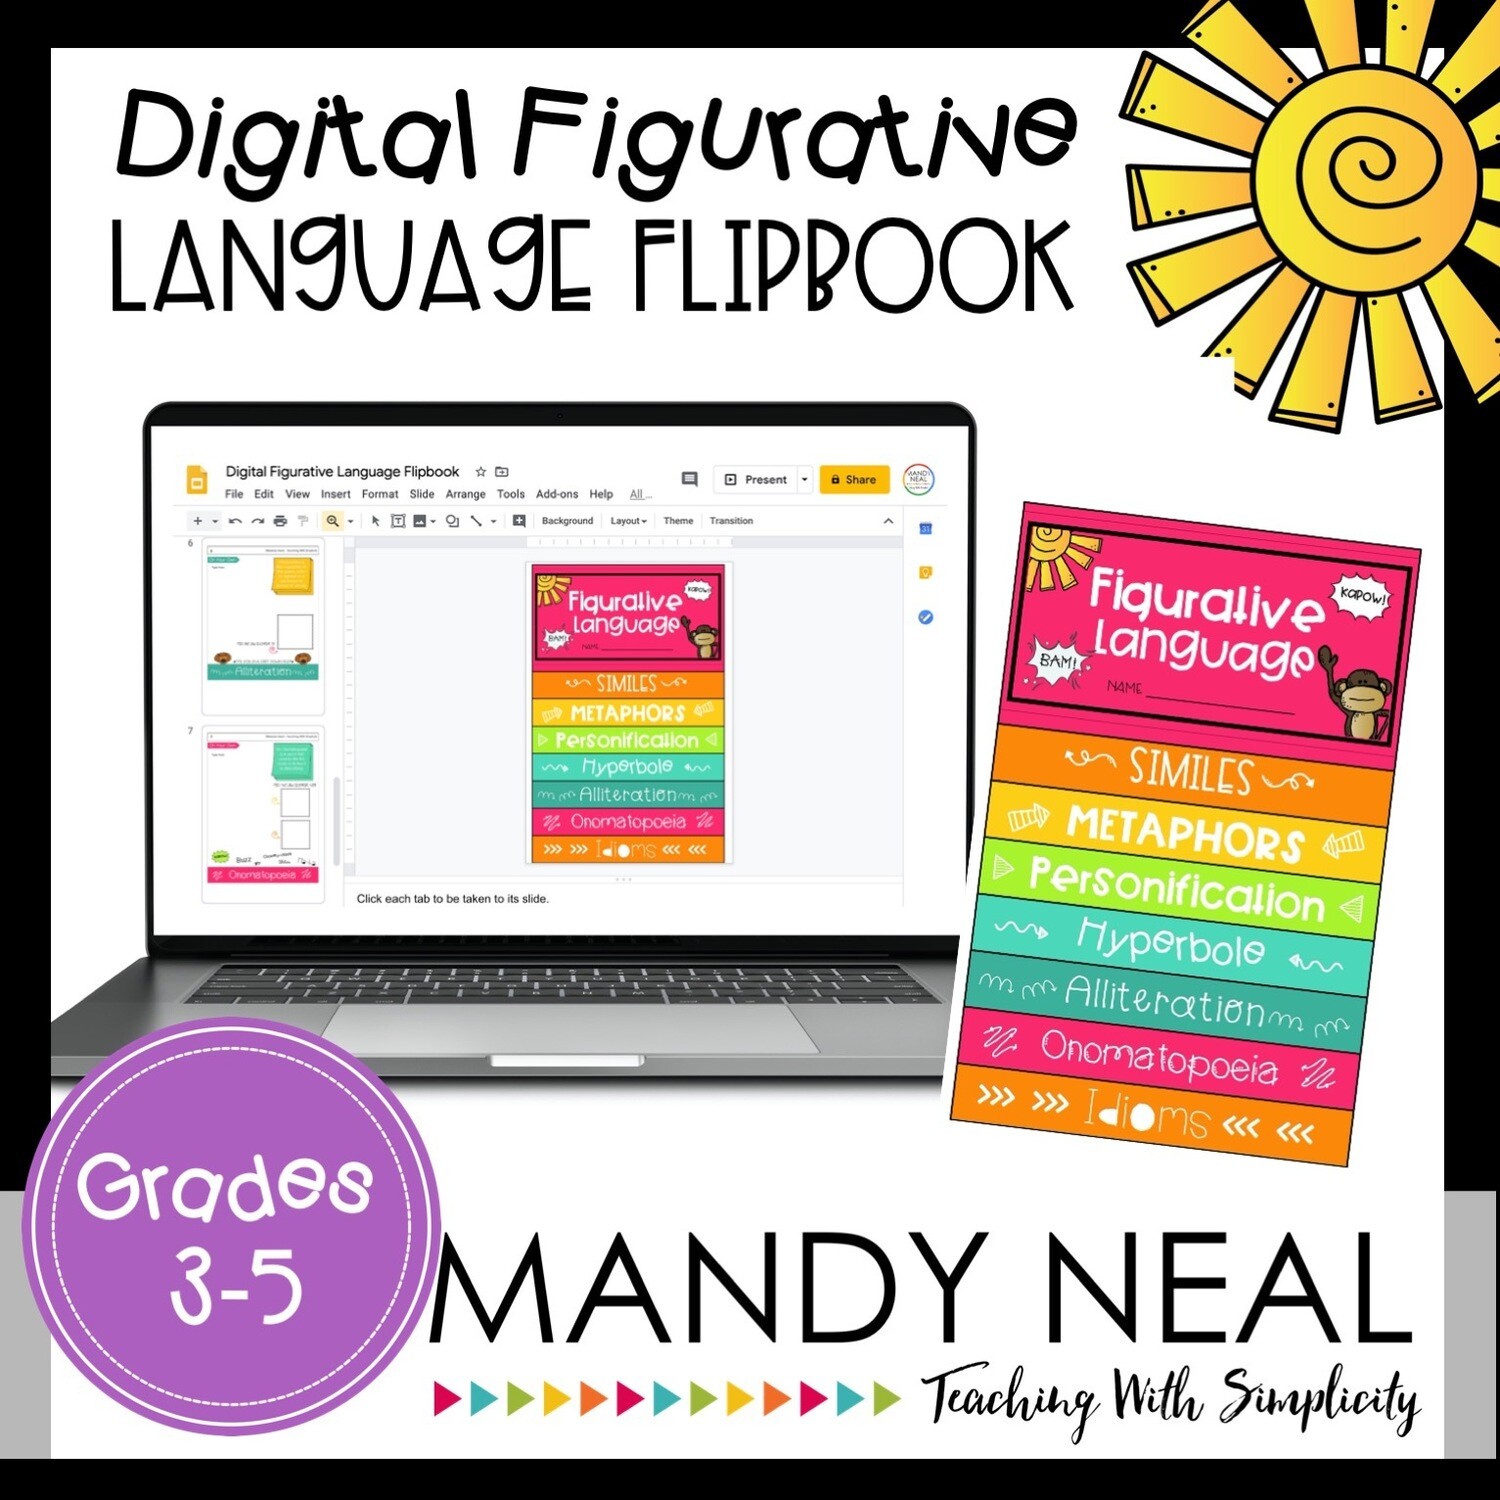 Digital Figurative Language Flipbook